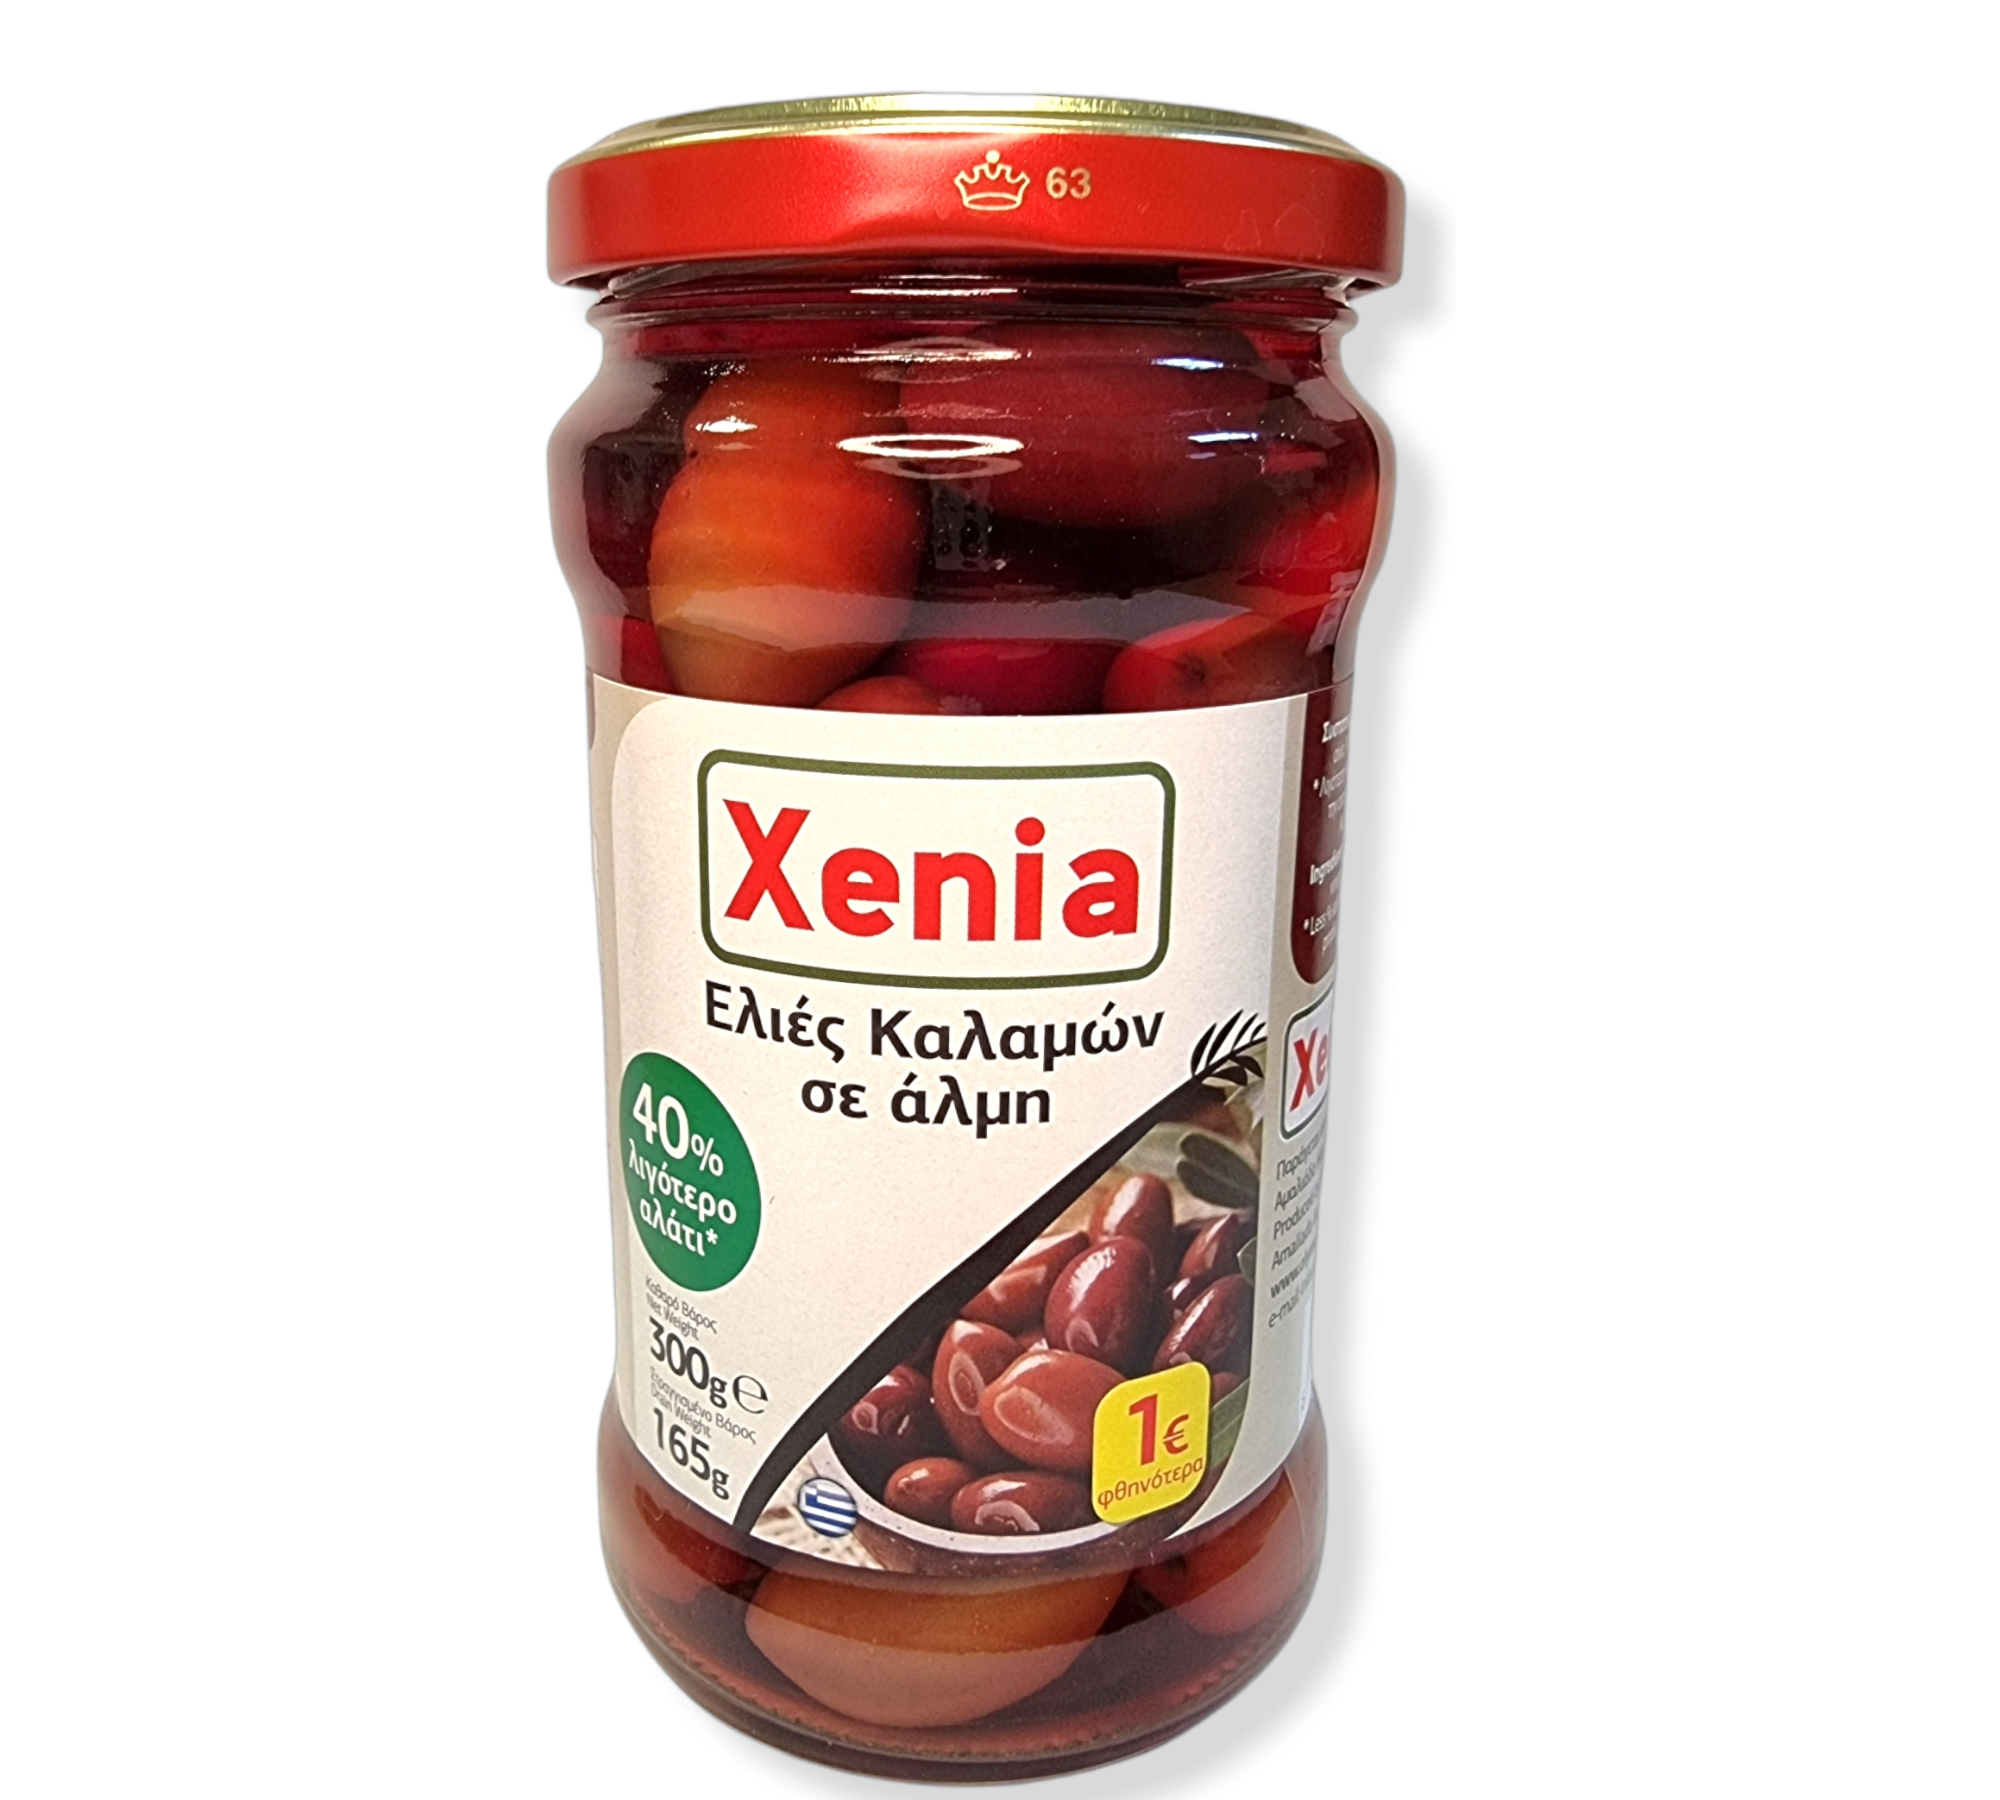 Xenia Oliven Kalamon 40% weniger Salz 300g (Öl & Oliven) - Bild 1